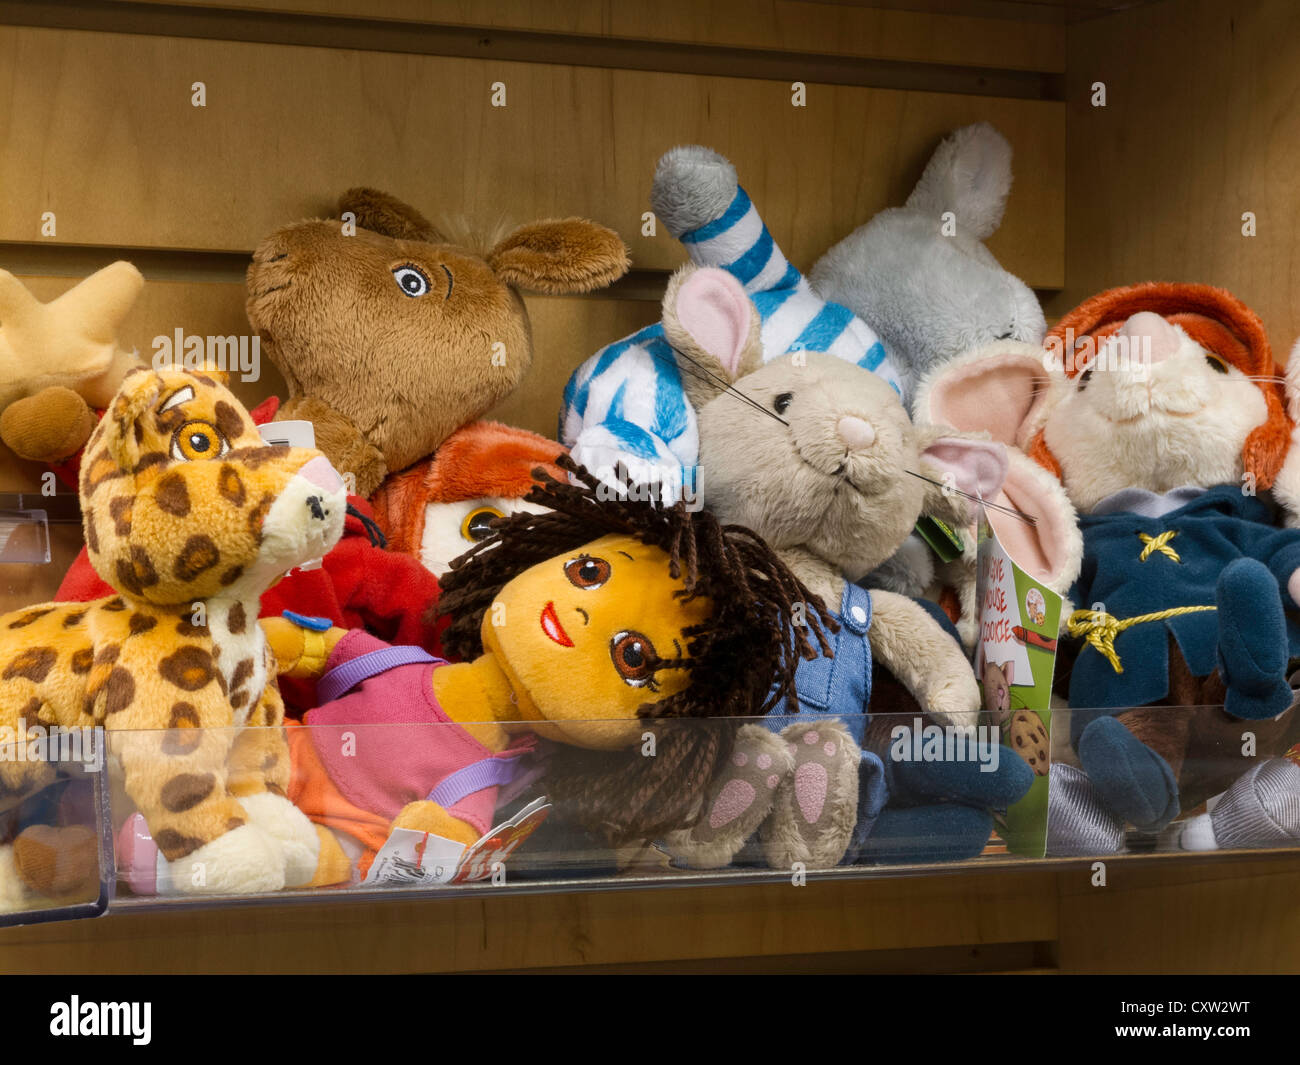 Stuffed Animals and Characters in Retail Shelf Display, USA Stock Photo -  Alamy